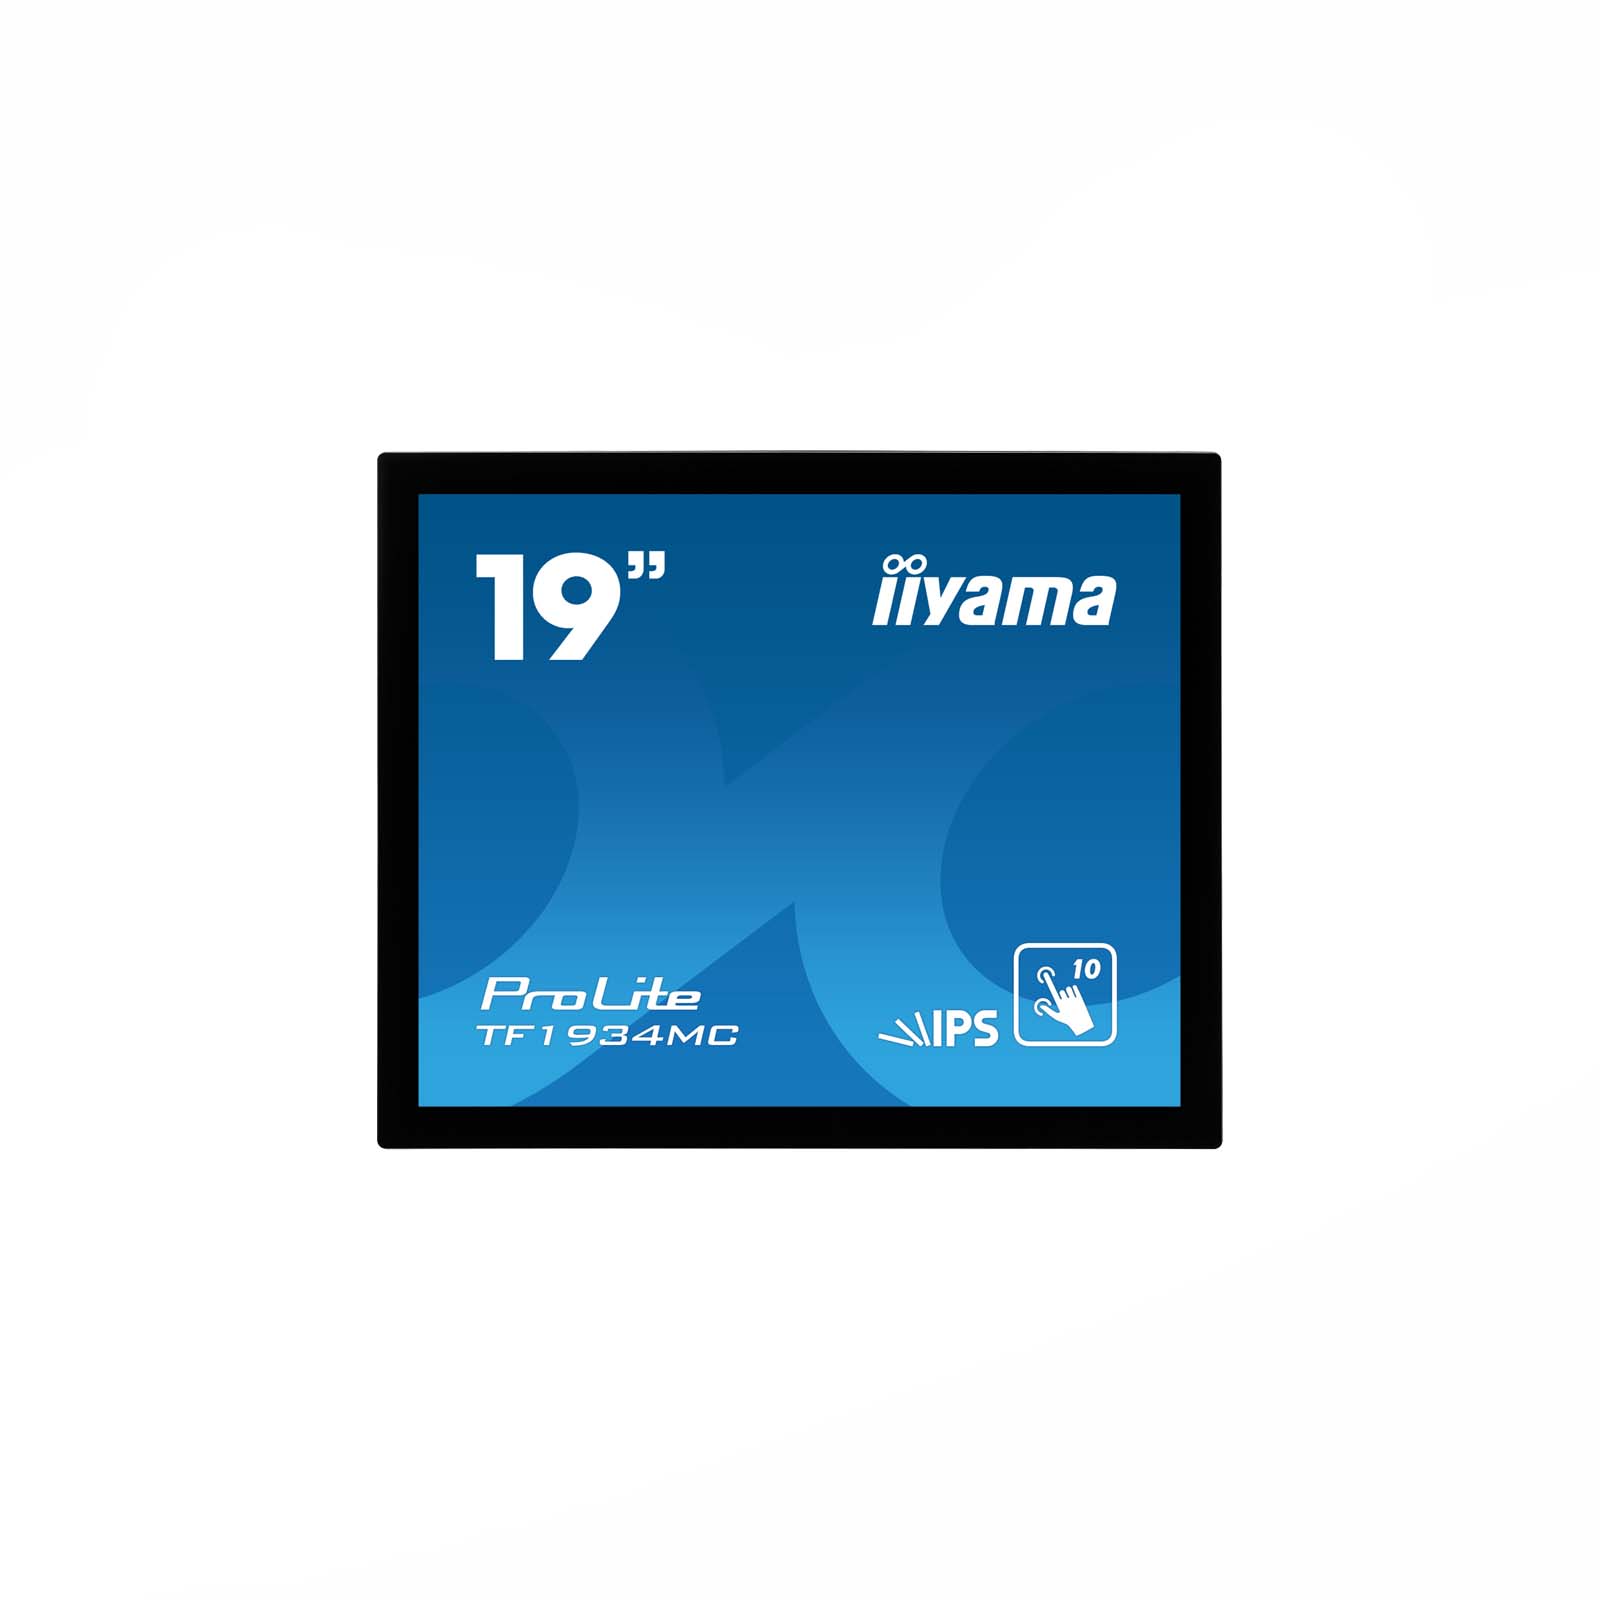 Monitor 19" LCD touchscreen iiyama